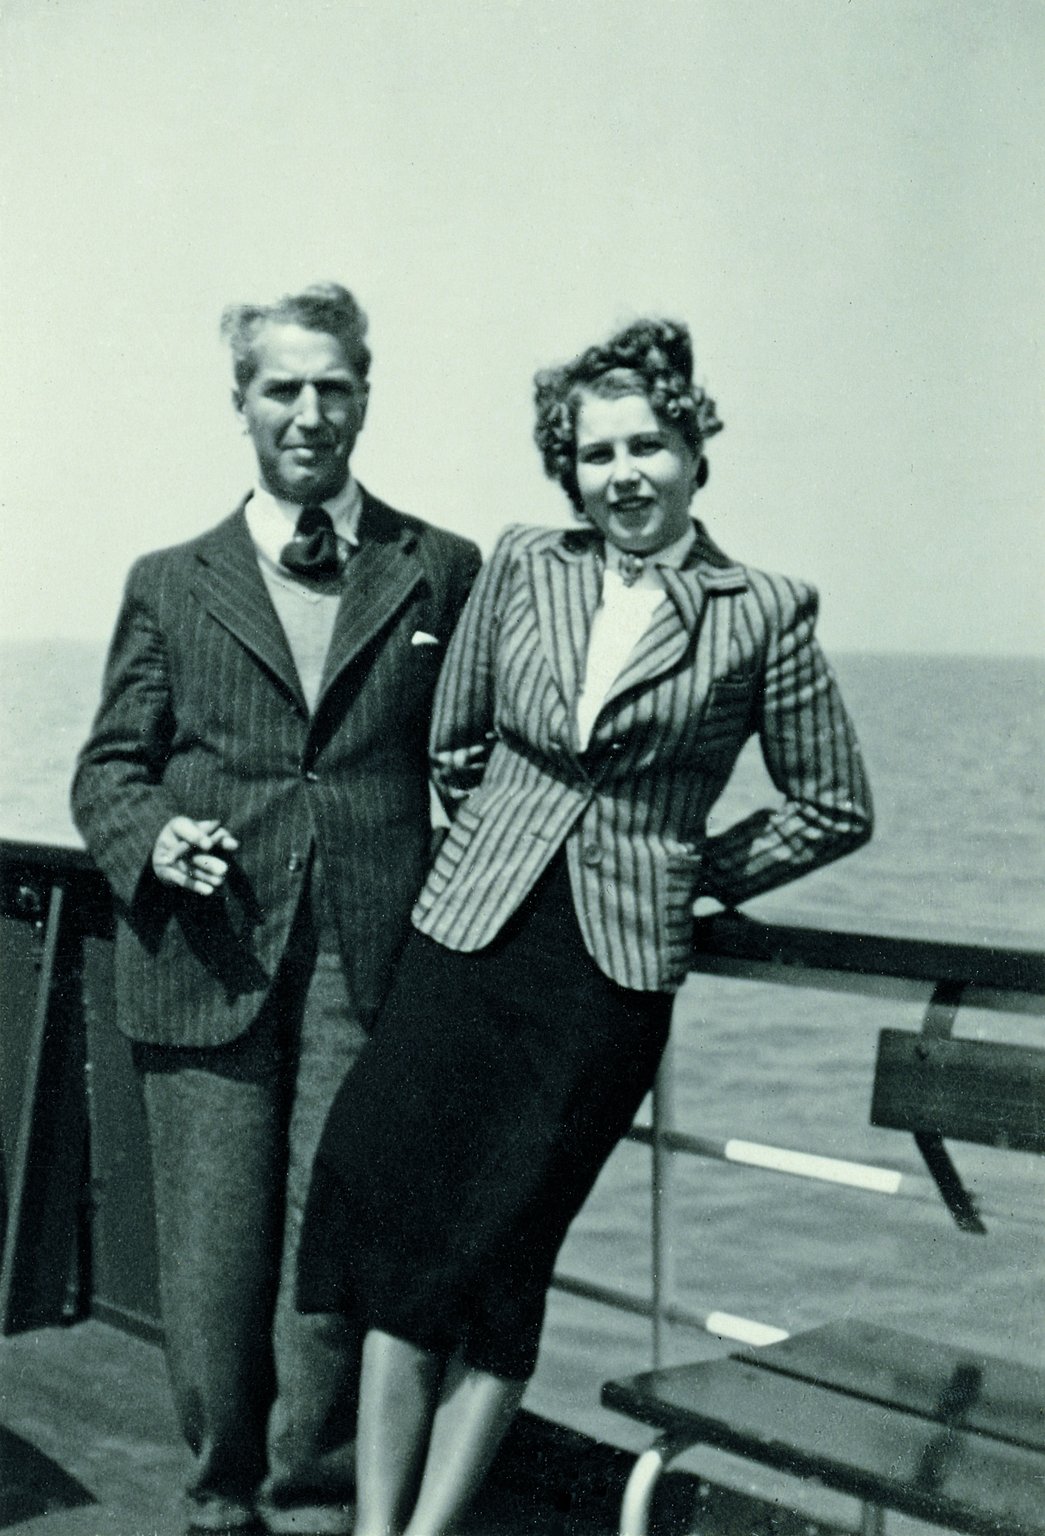 Fritz Pfeffer con su prometida Charlotte Kaletta, aproximadamente en 1940.